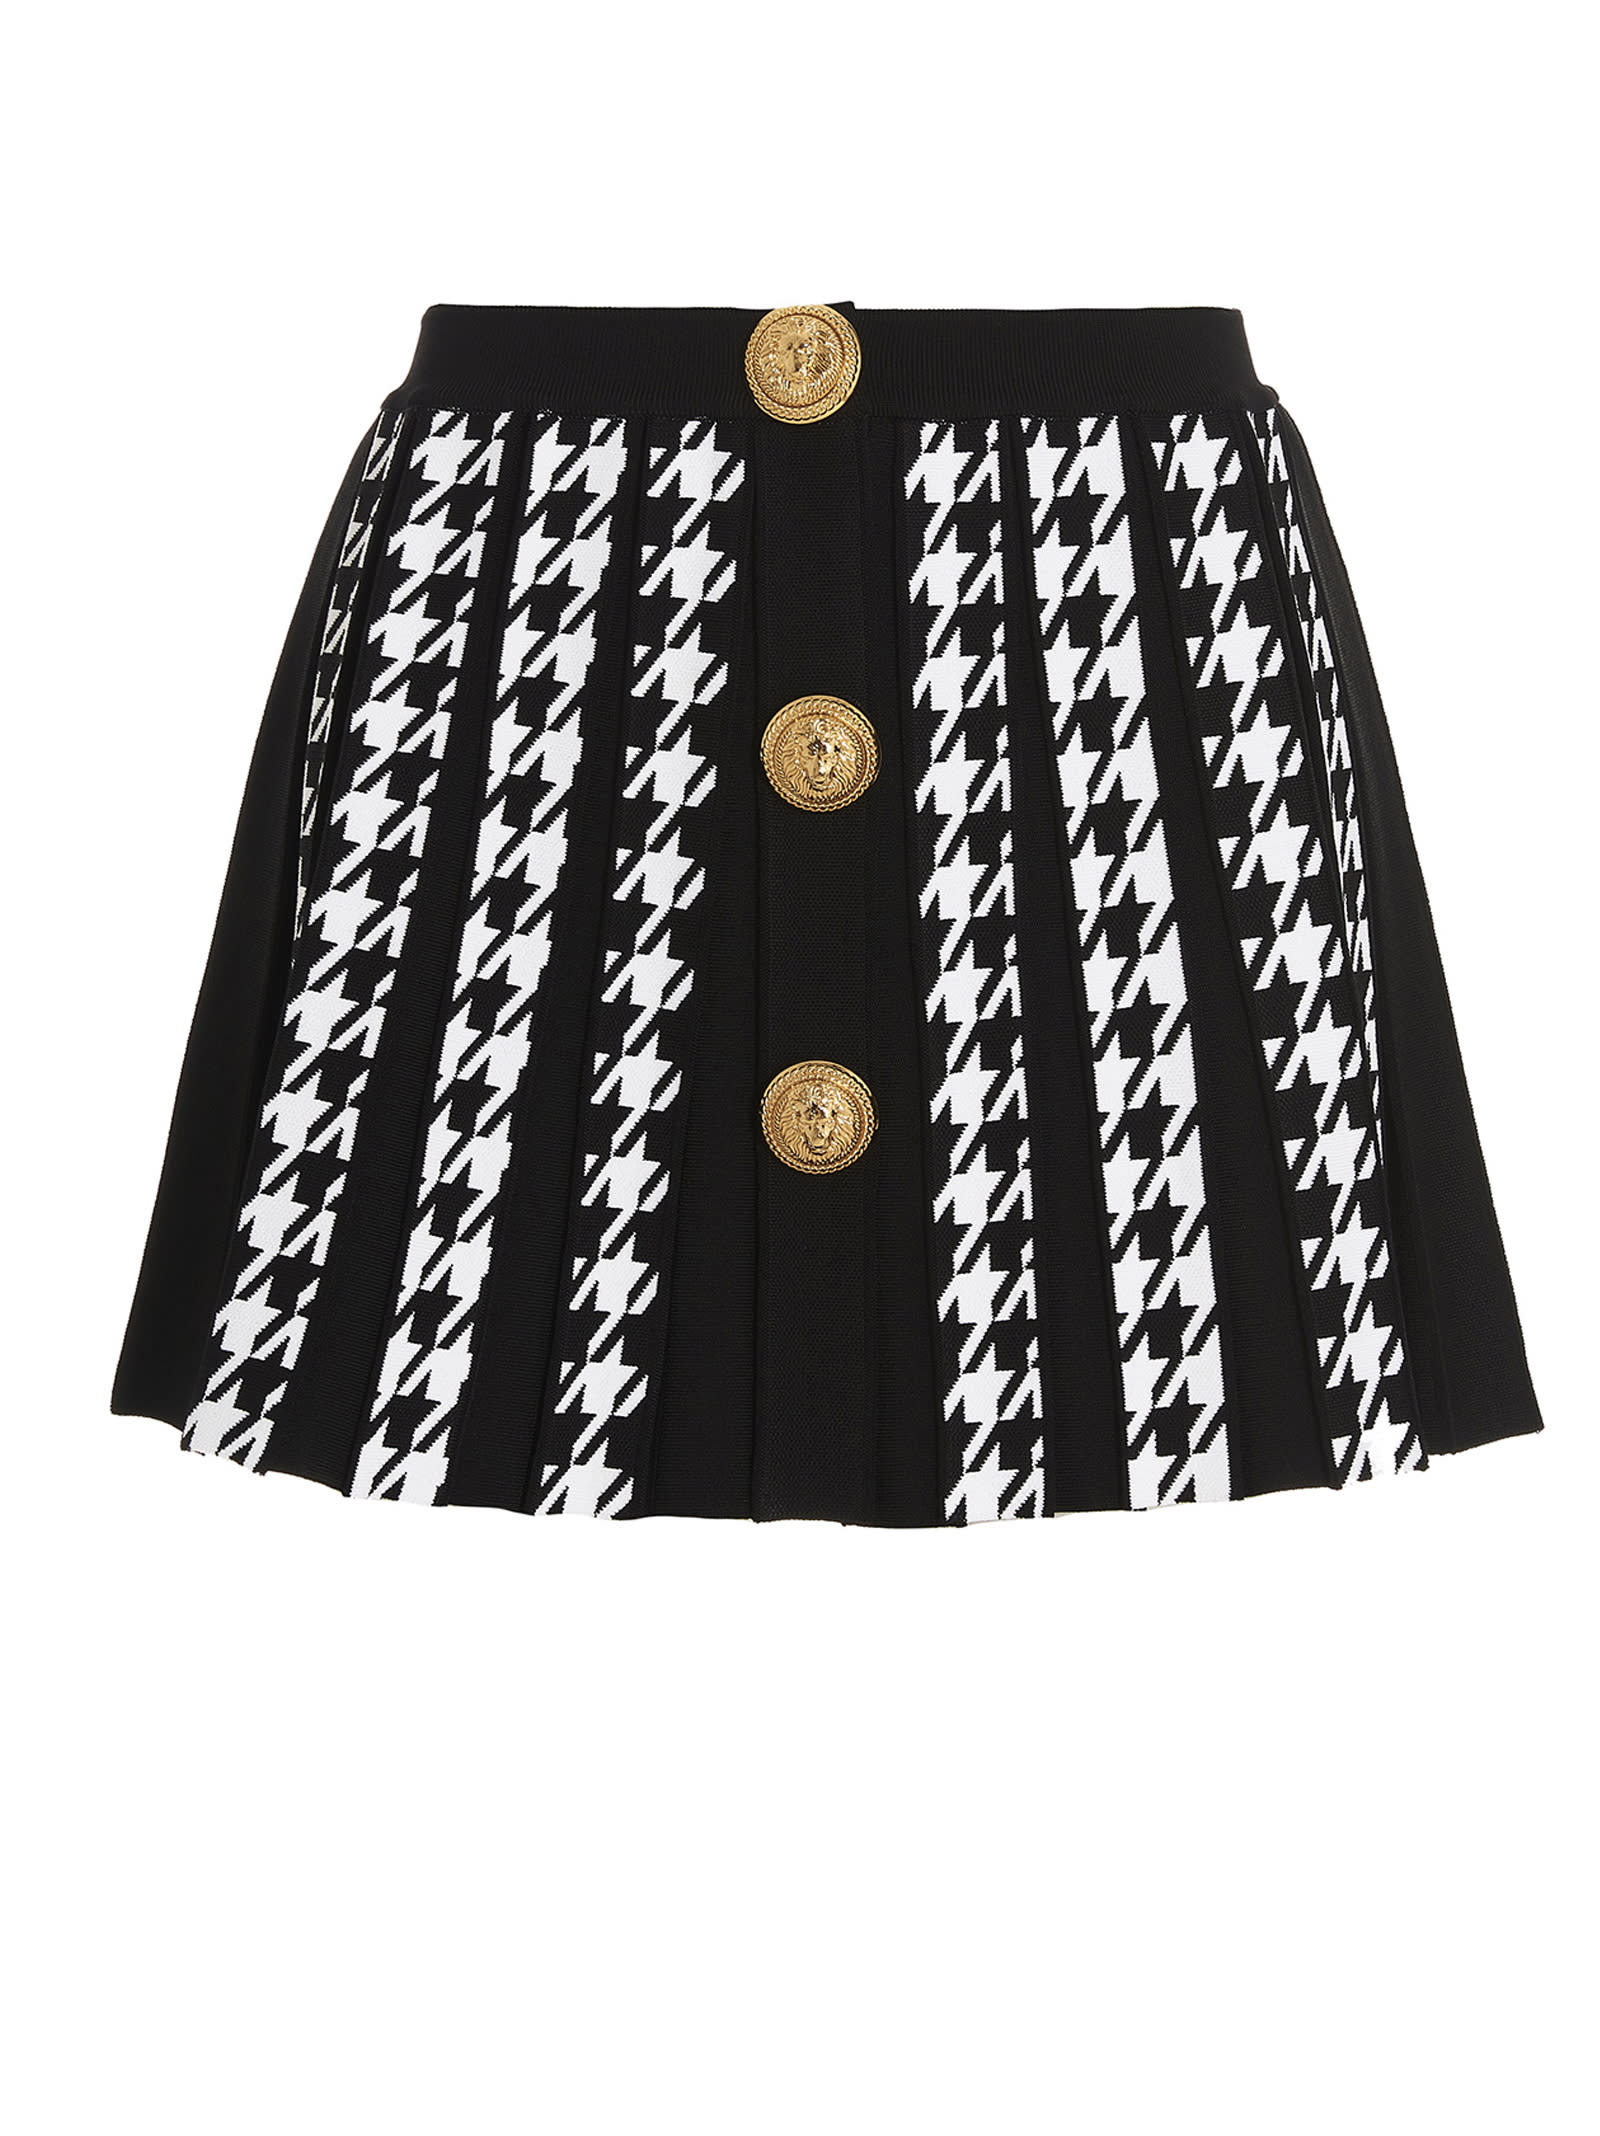 Balmain houndstooth Skirt